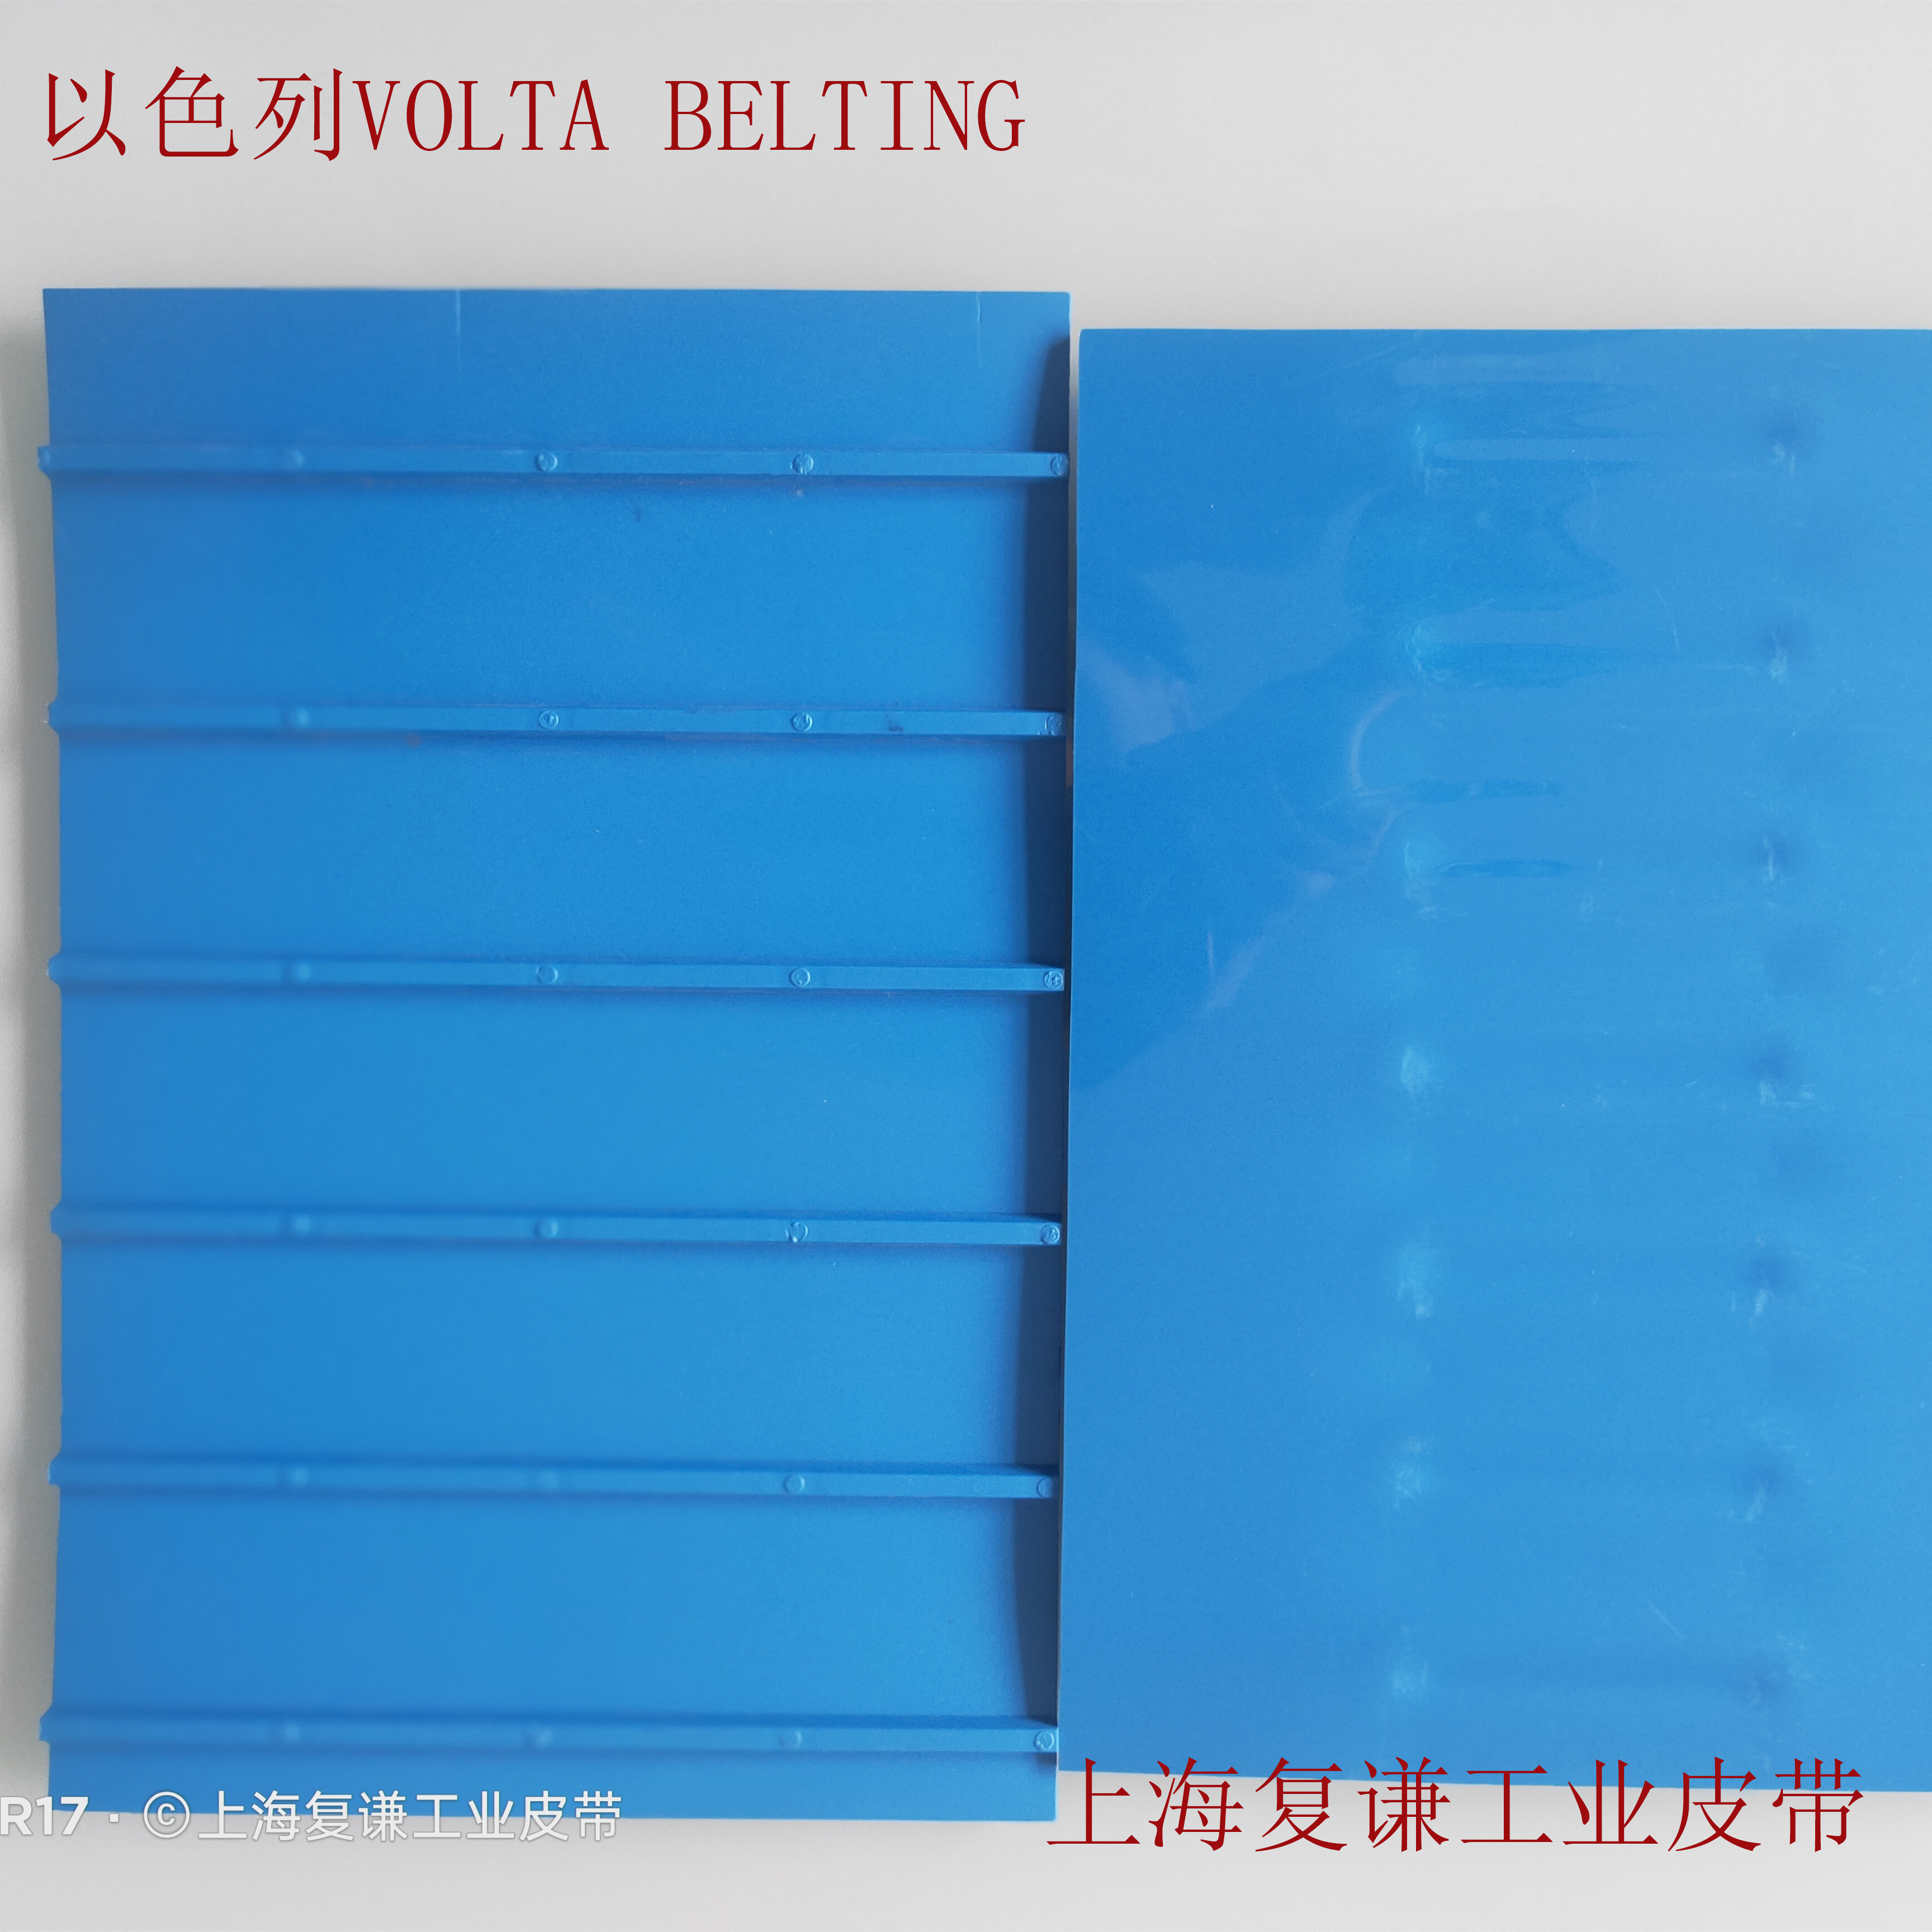 Volta Belting _ Belting Technology_filesIMG20201107094316_副本.jpg